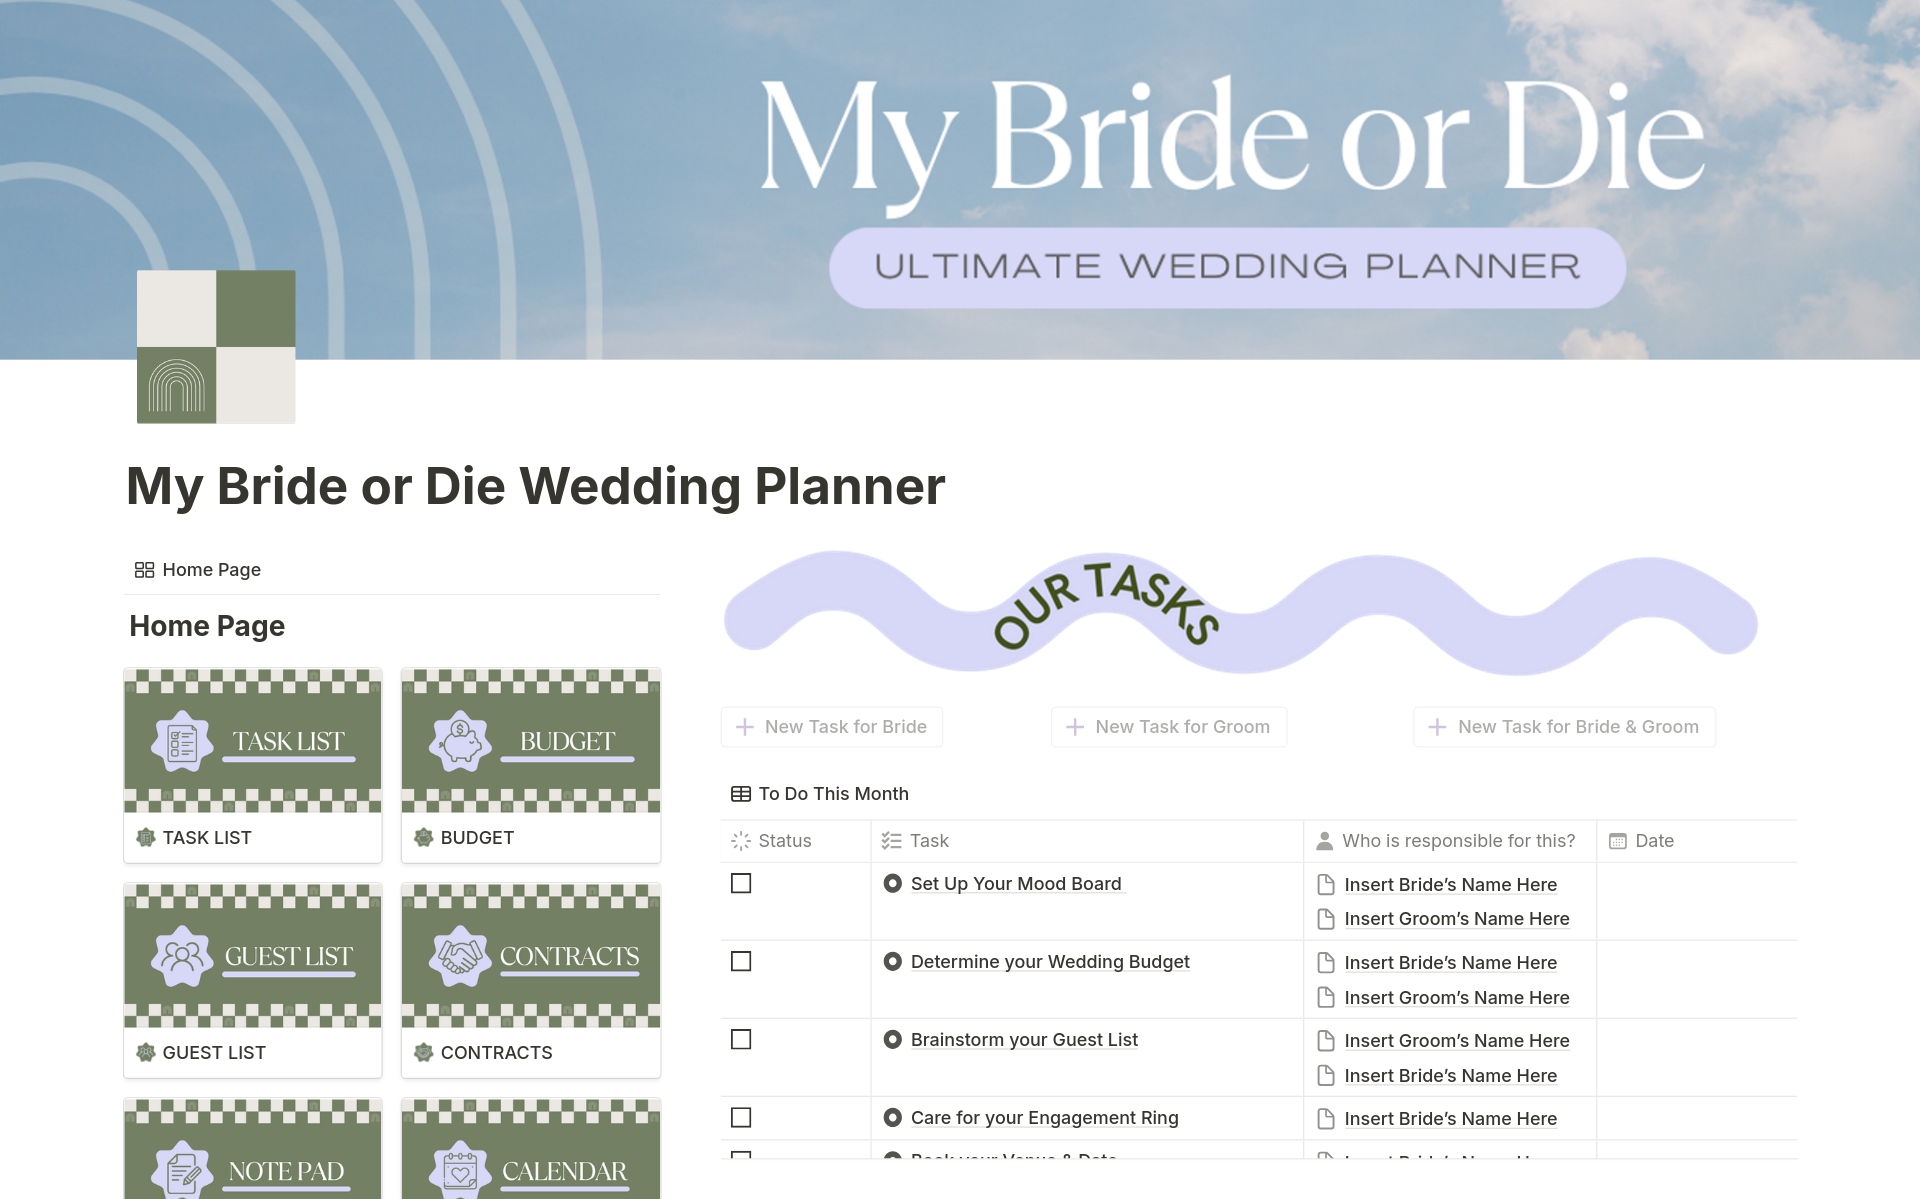 Aperçu du modèle de My Bride or Die Wedding Planner